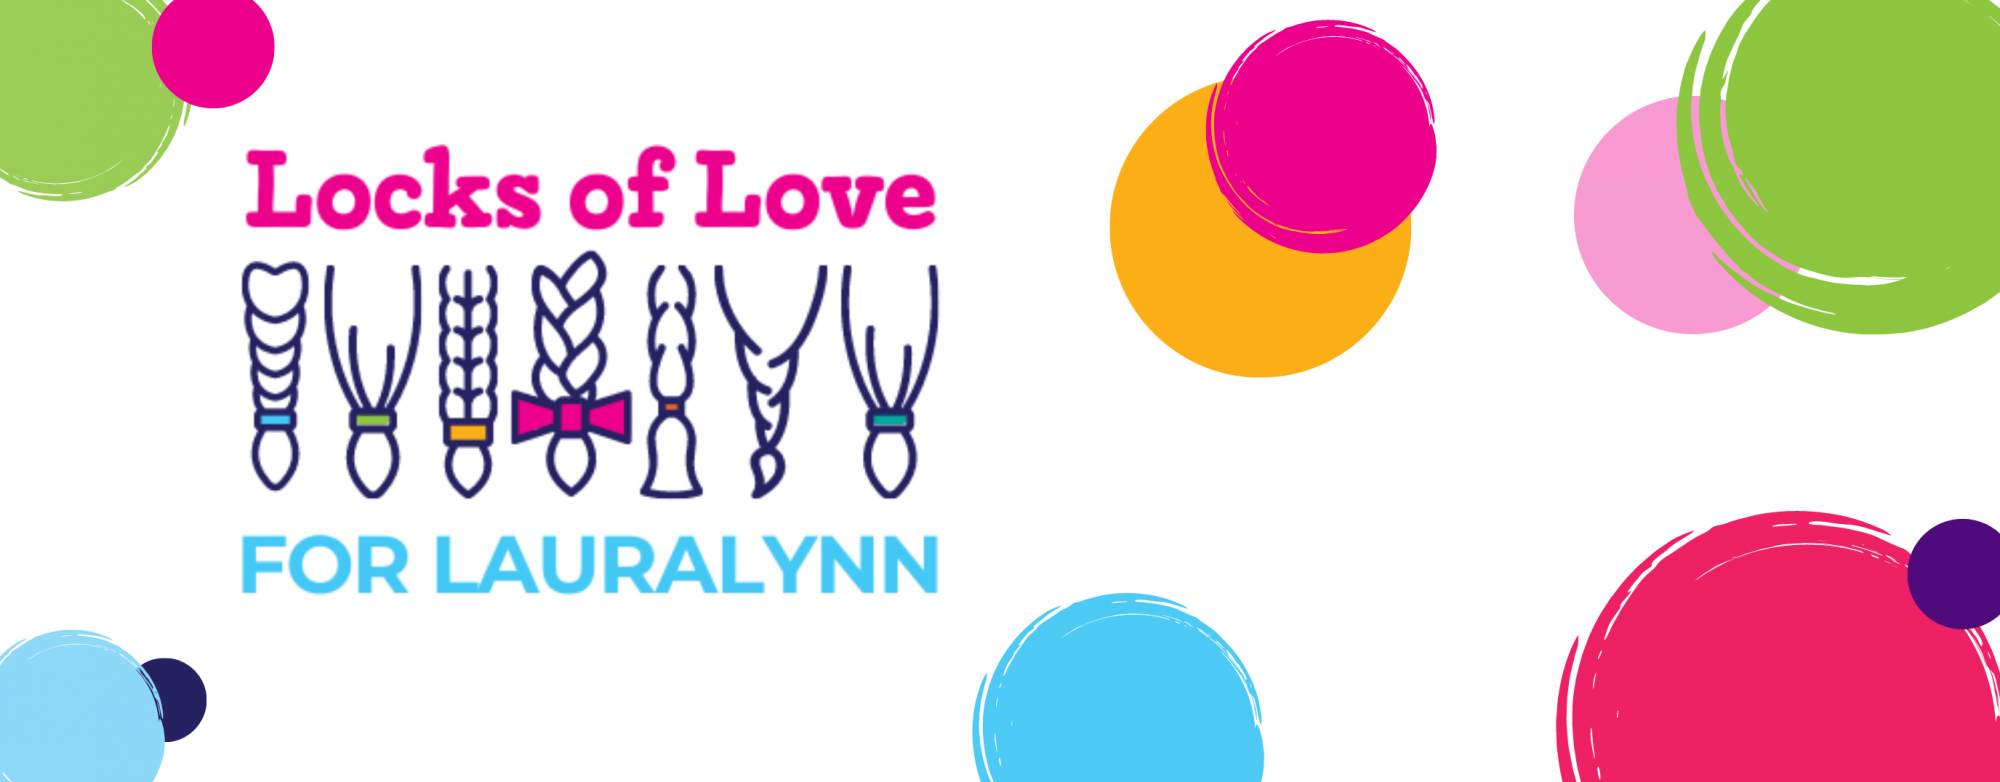 Locks of Love for LauraLynn